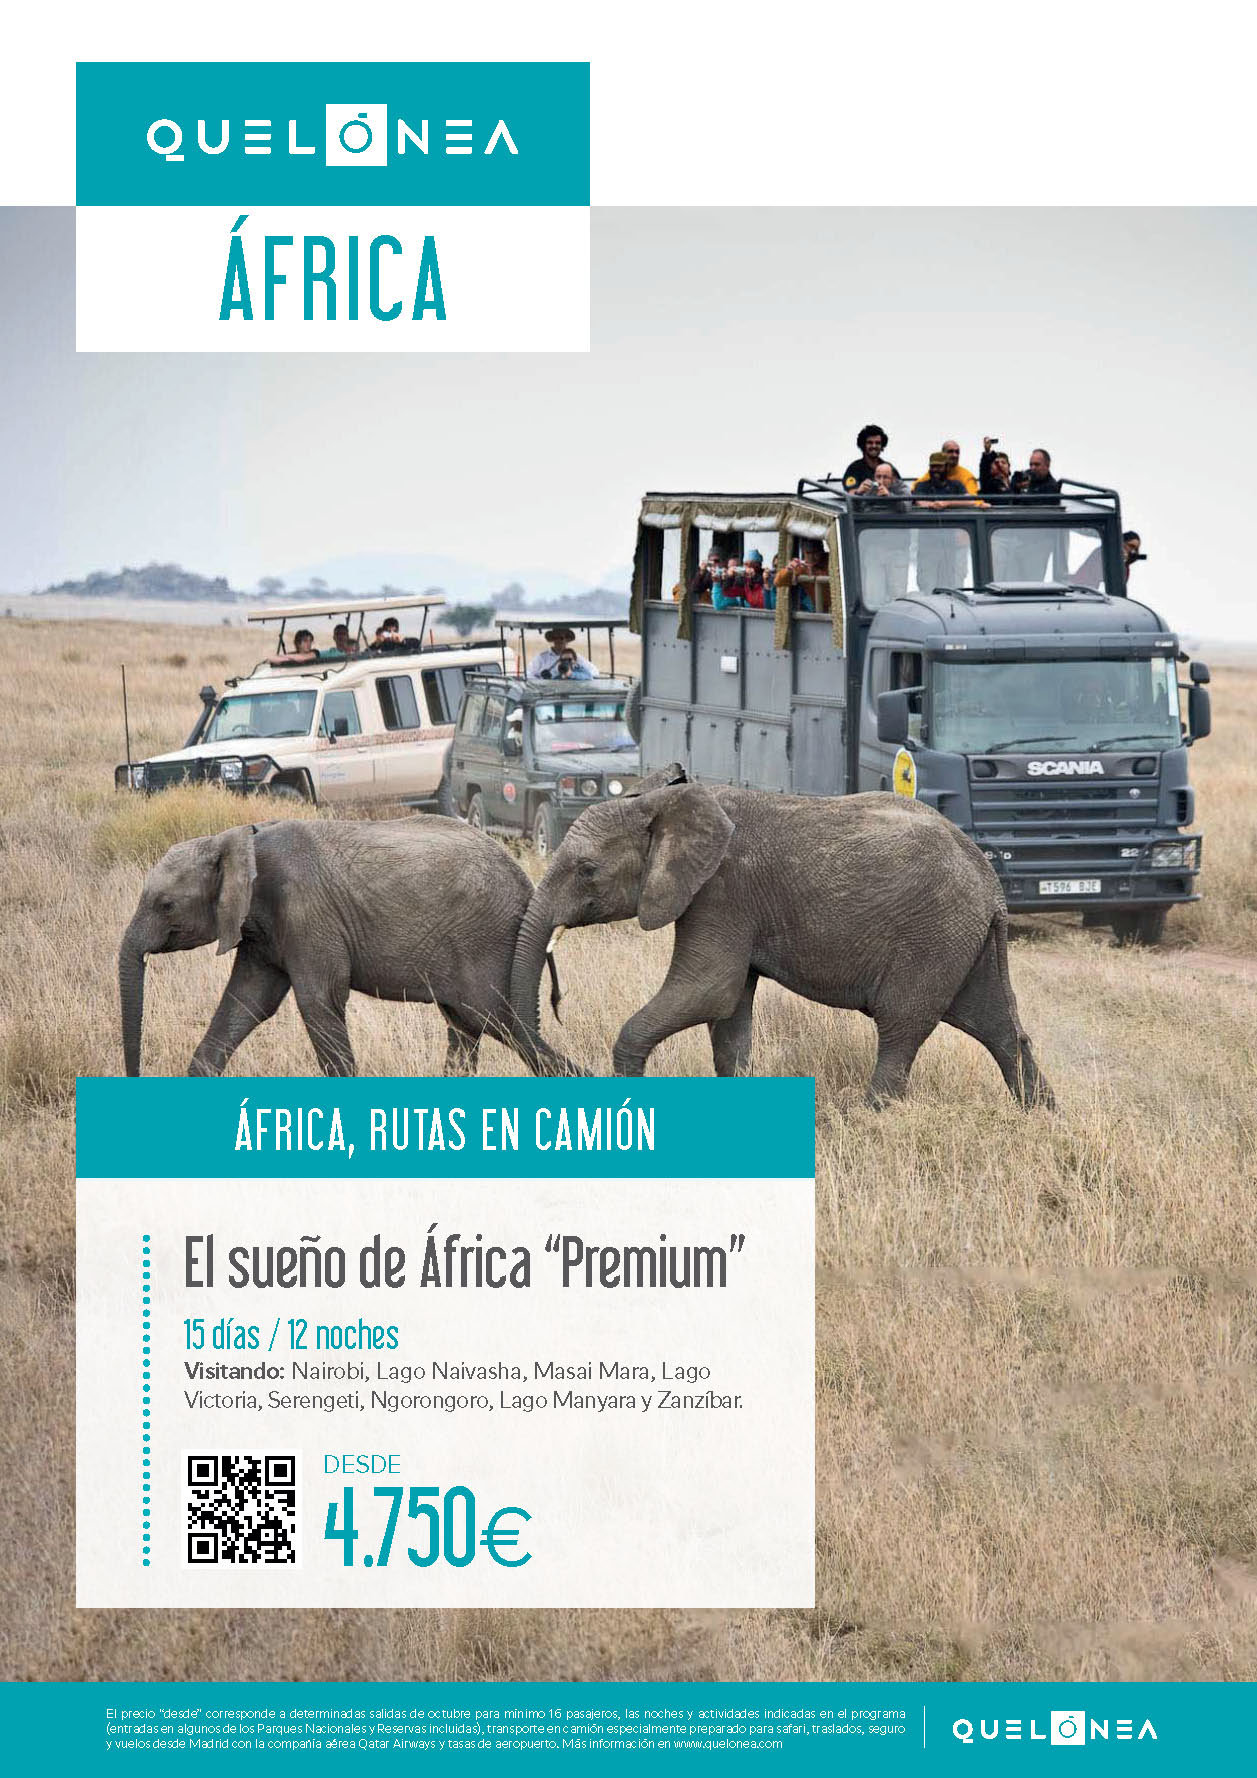 Oferta Quelonea 2022-2023 Circuito Africa Ruta en camion El Sueño del Africa Premium 15 dias